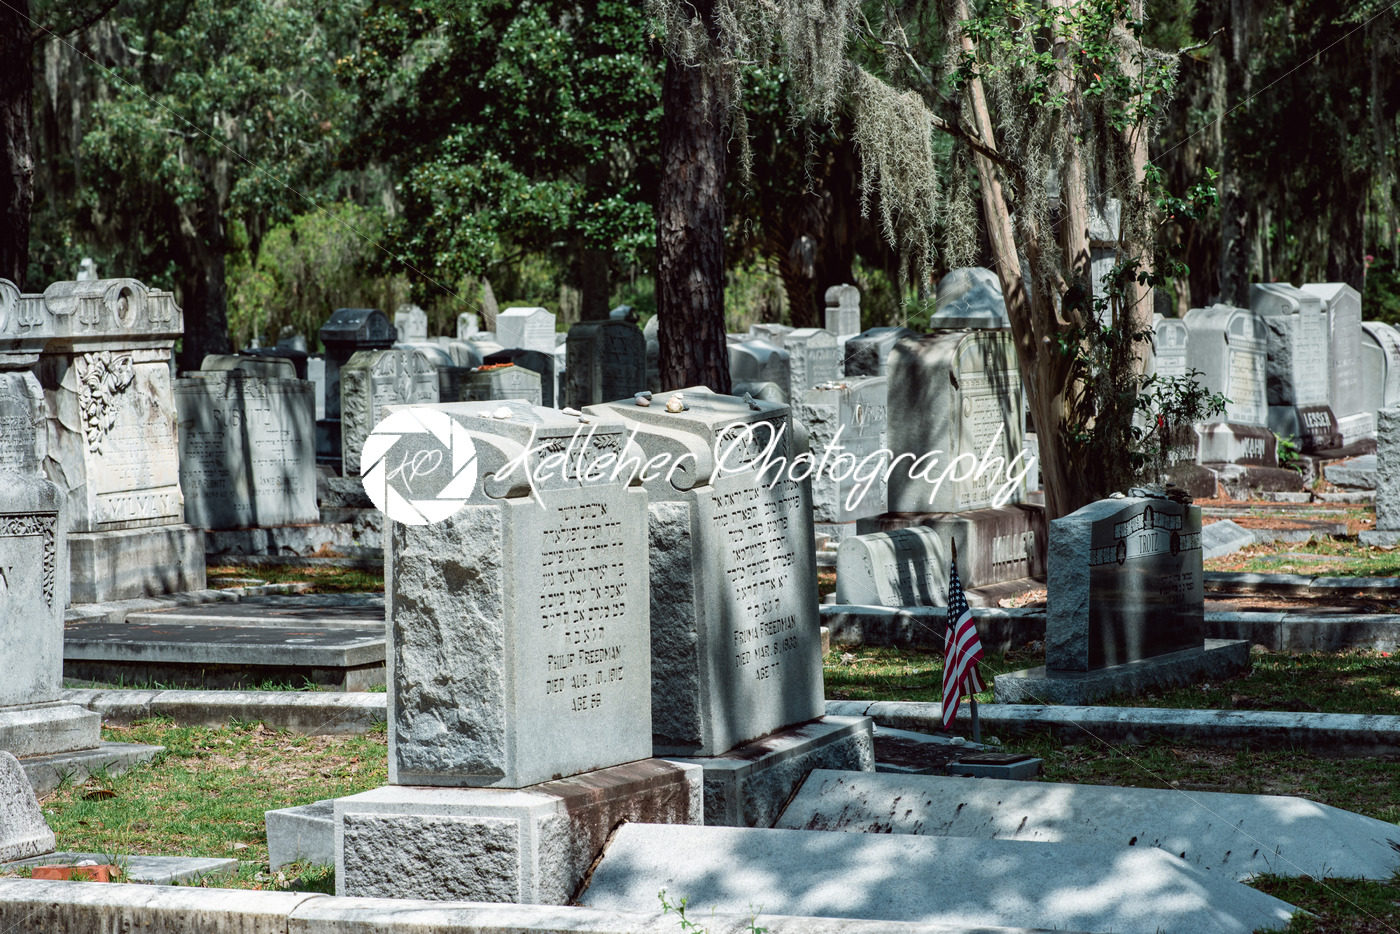 Jewish Cemetery Statuary Statue Bonaventure Cemetery Savannah Georgia - Kelleher Photography Store